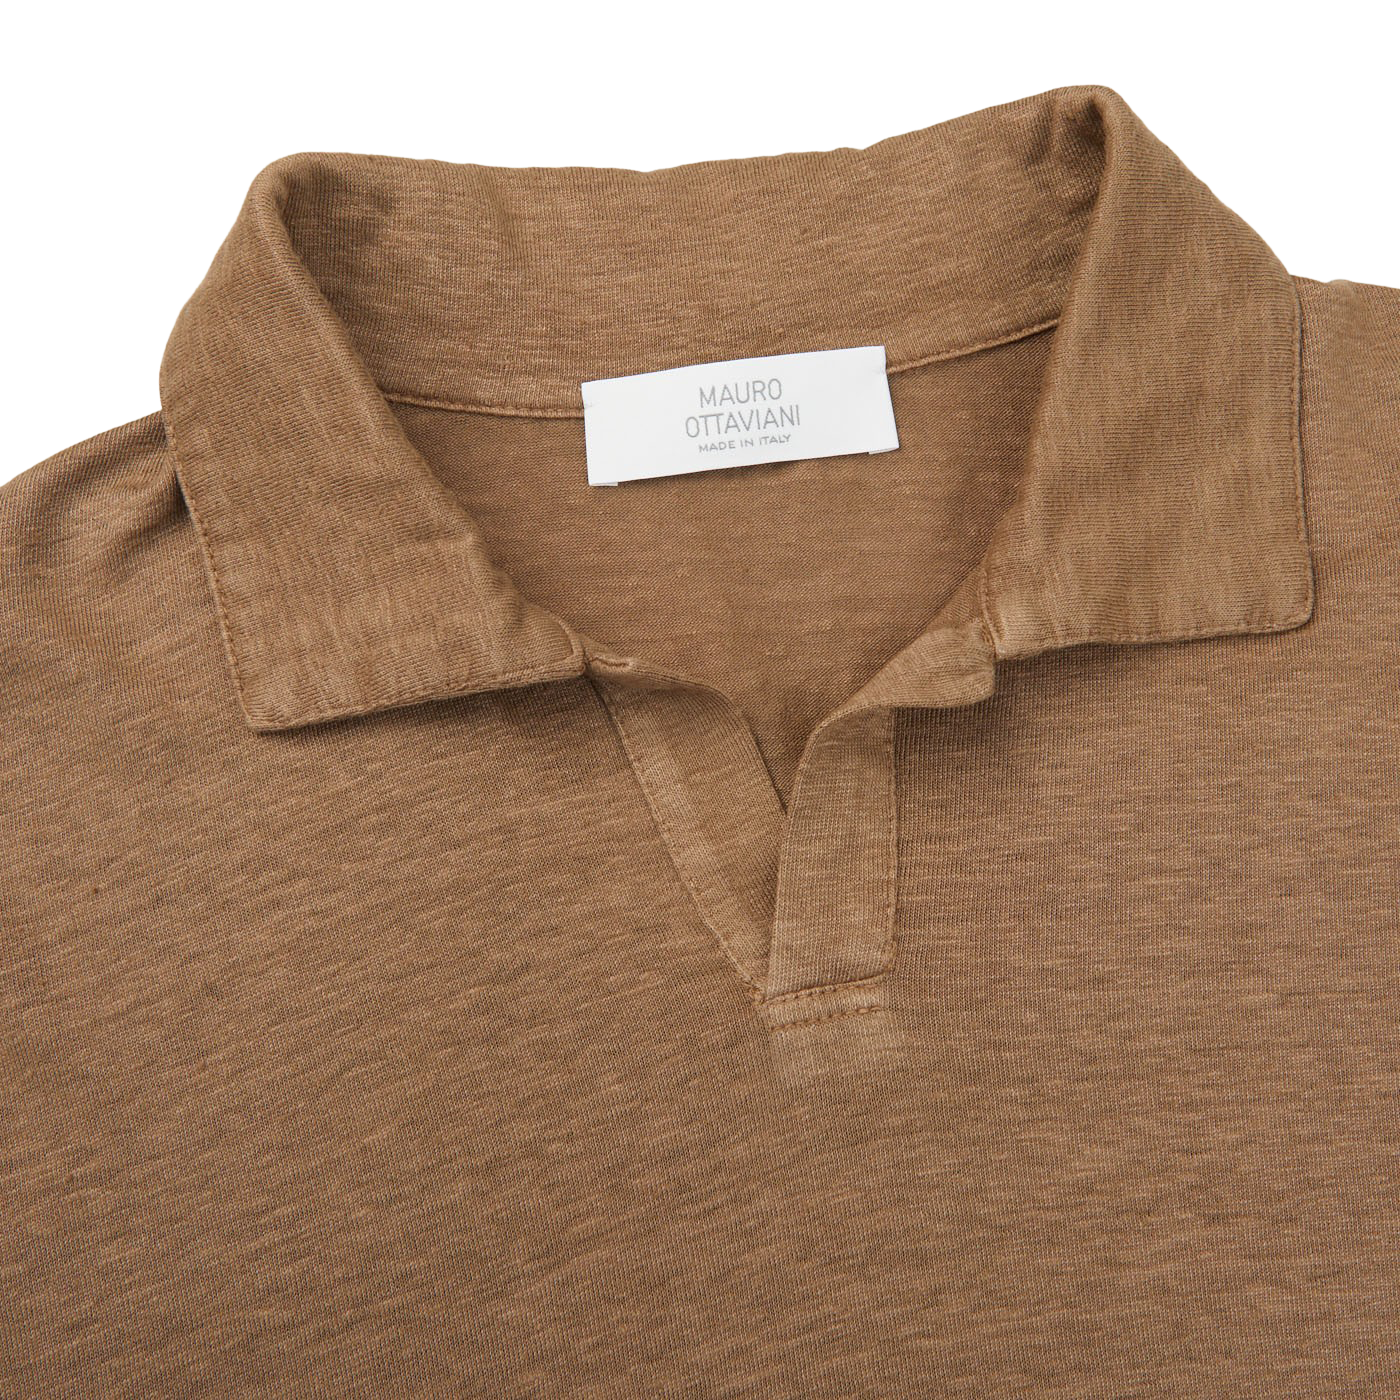 Mauro Ottaviani Cinnamon Brown Washed Linen Polo Shirt Collar